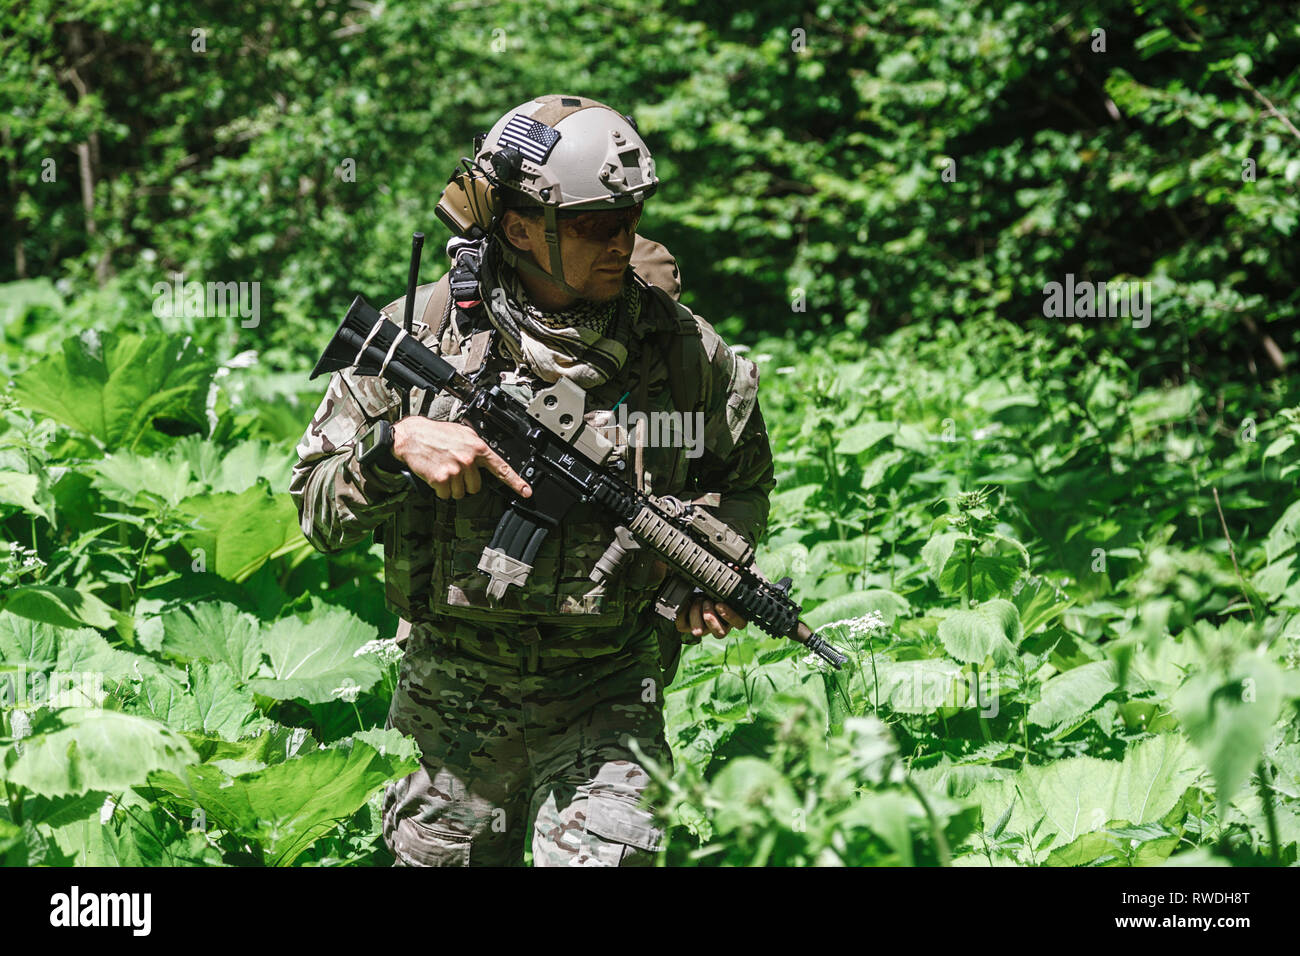 U.S. Army Rangers - Jungle Camo